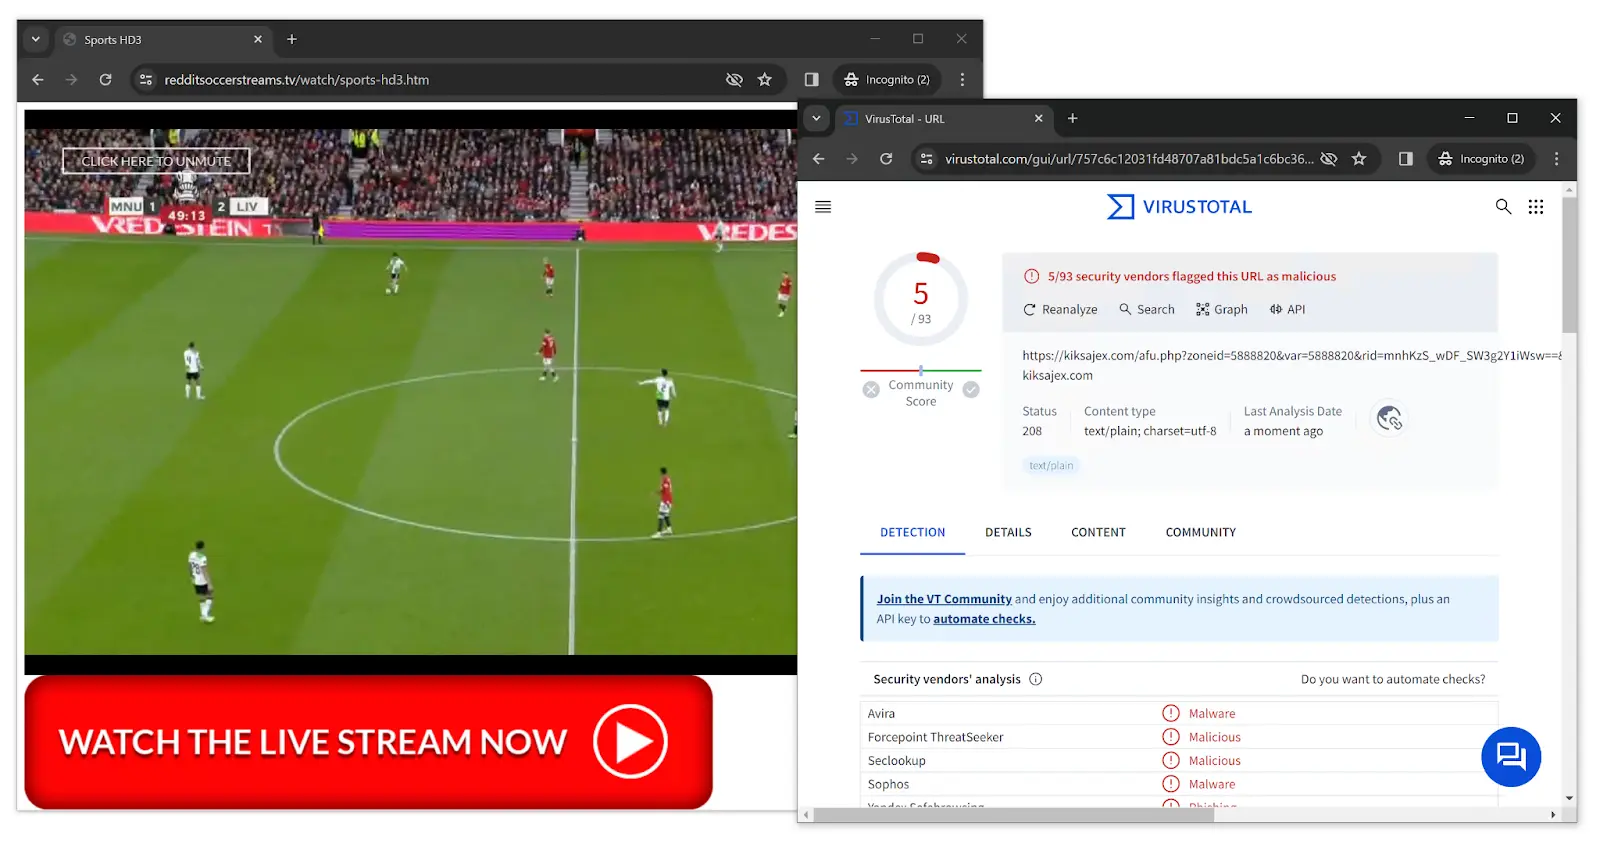 A Reddit Soccer Streams live stream alongside a VirusTotal report flagging a URL as malicious